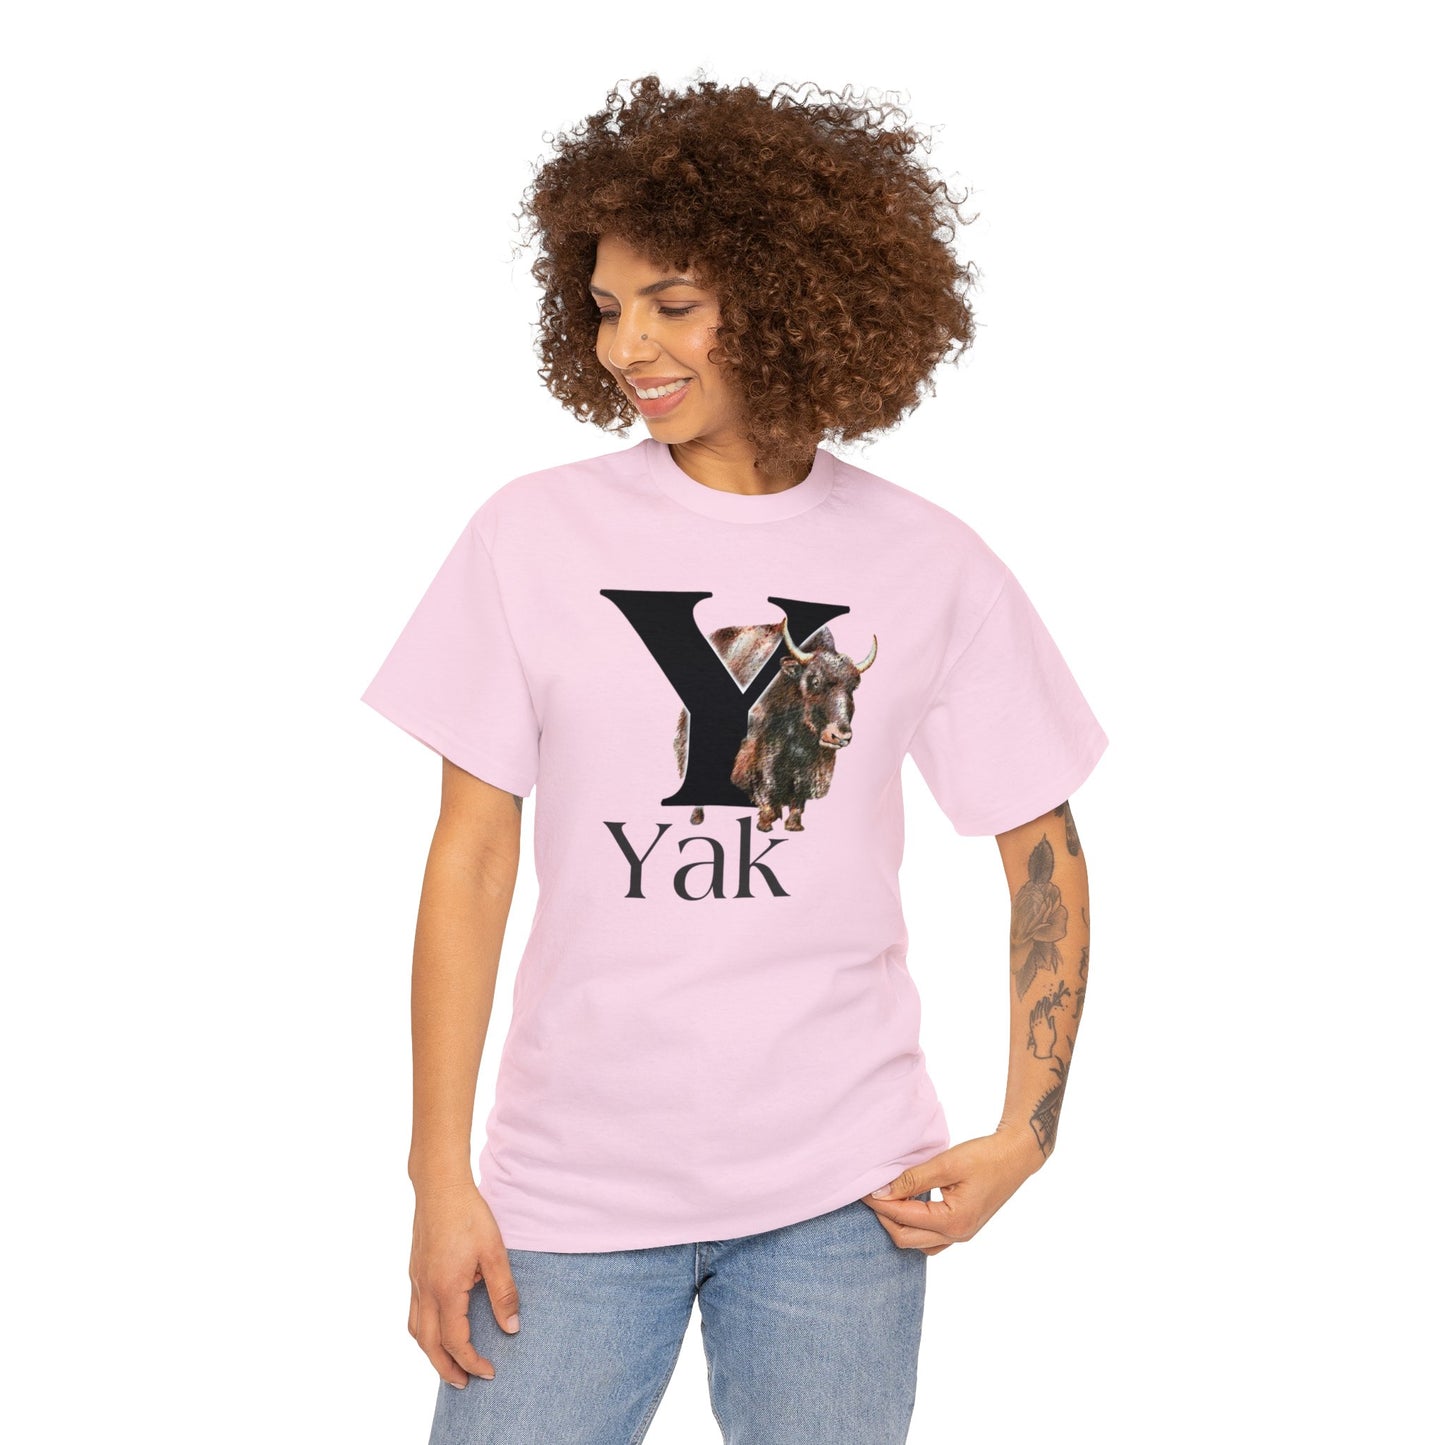 Y is for Yak T-shirt. Yak Drawing T-Shirt, Yak on shirt, Yak illustration, animal t-shirt, animal